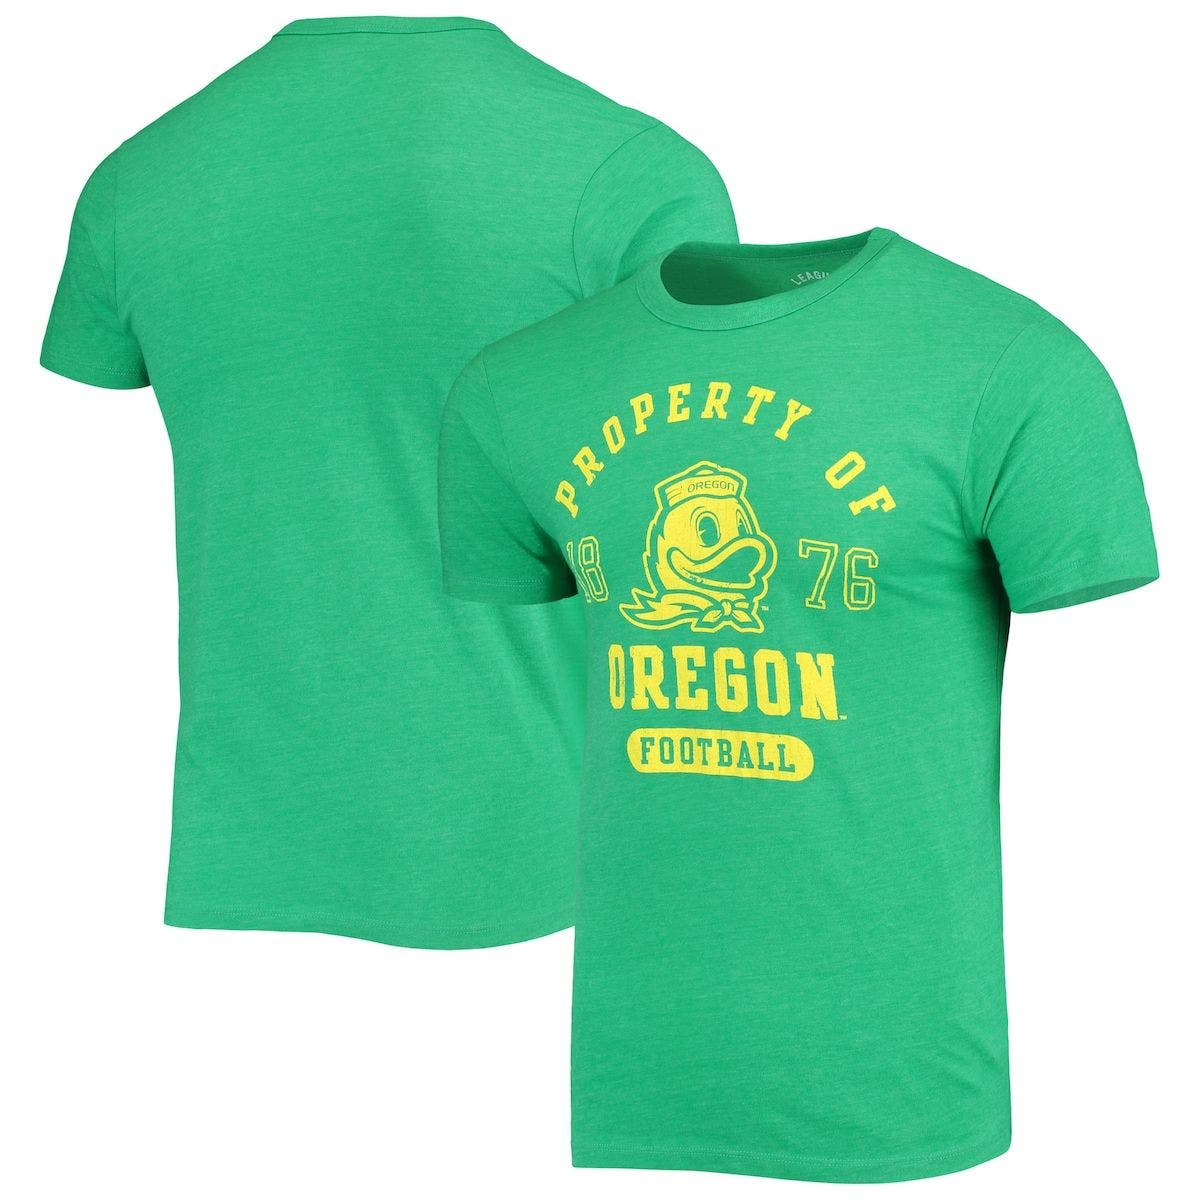 Marys Apparel Short Sleeve t-Shirt w/Green Logo Ms